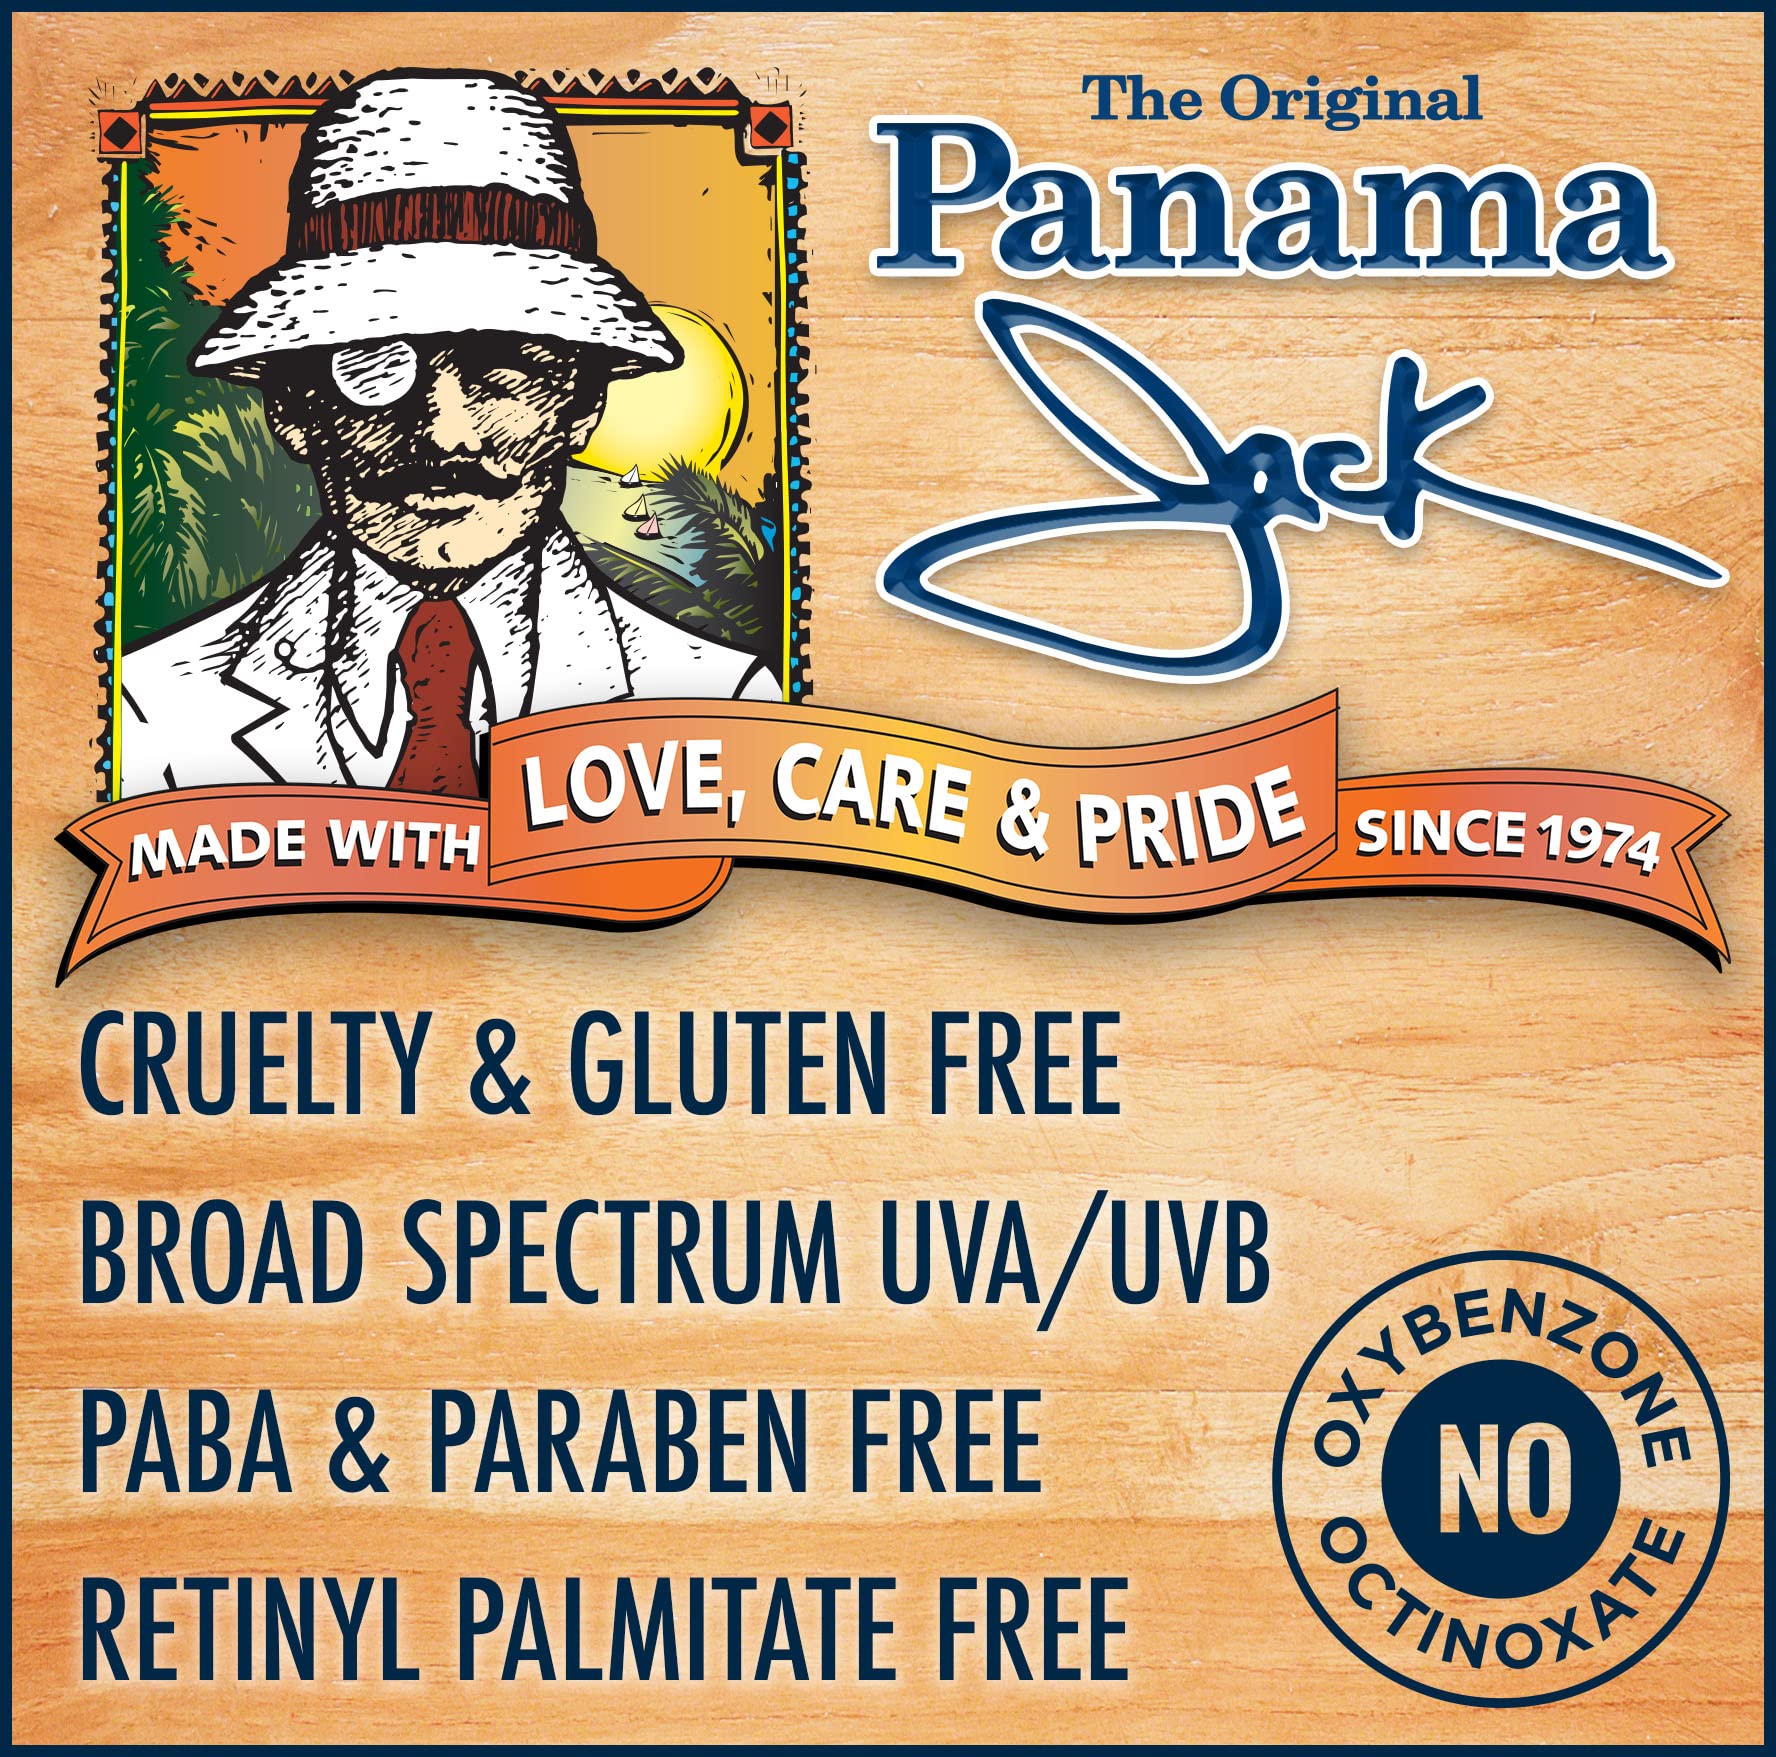 Panama Jack Continuous Spray Sunscreen, SPF 15, 5.5 Ounce